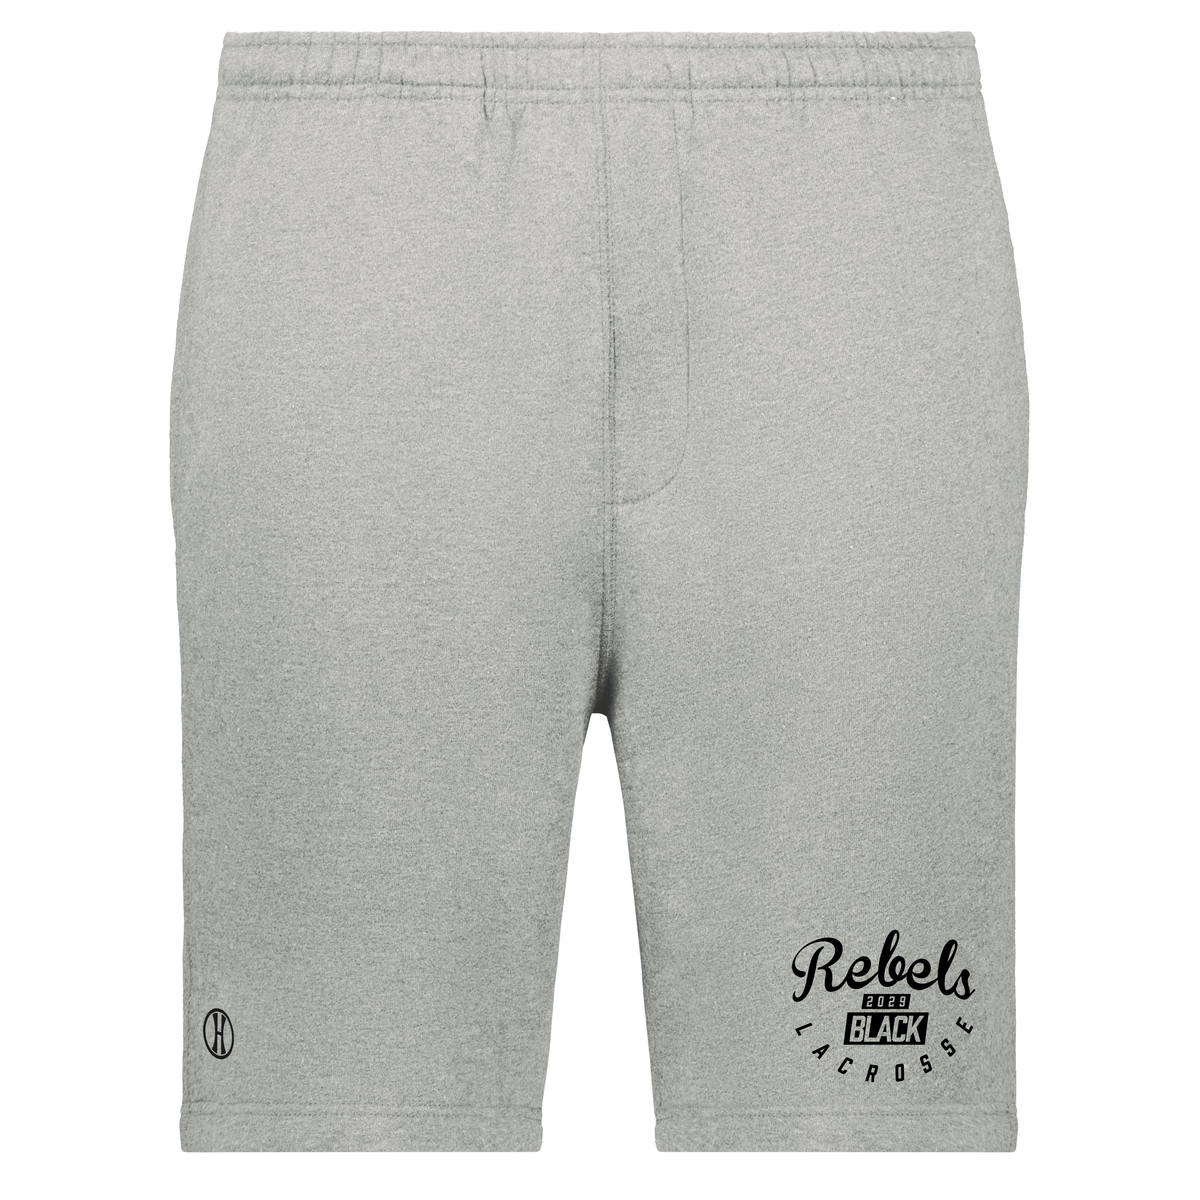 Rebels 2029 Black 60/40 Fleece Shorts